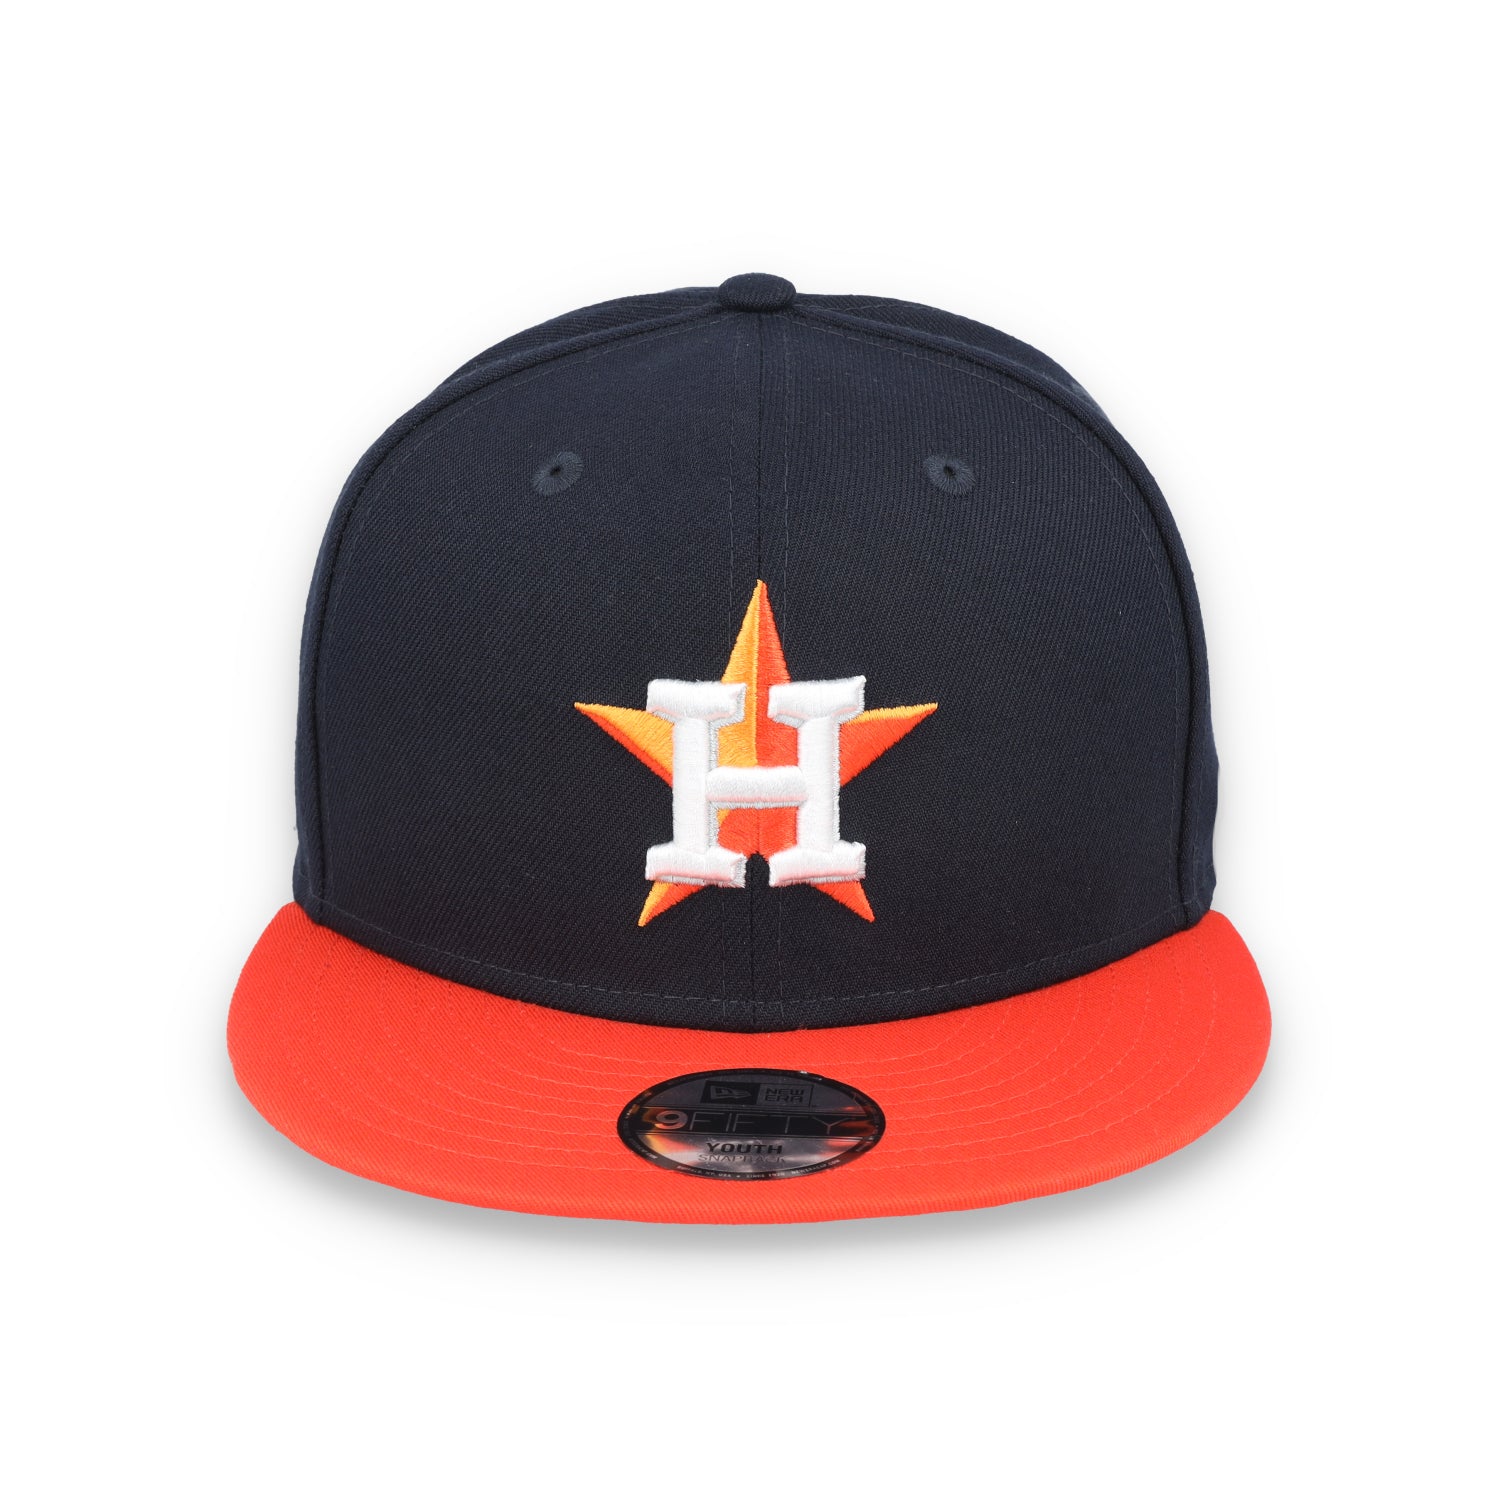 New Era Youth Houston Astros 9FIFTY Snapback Hat